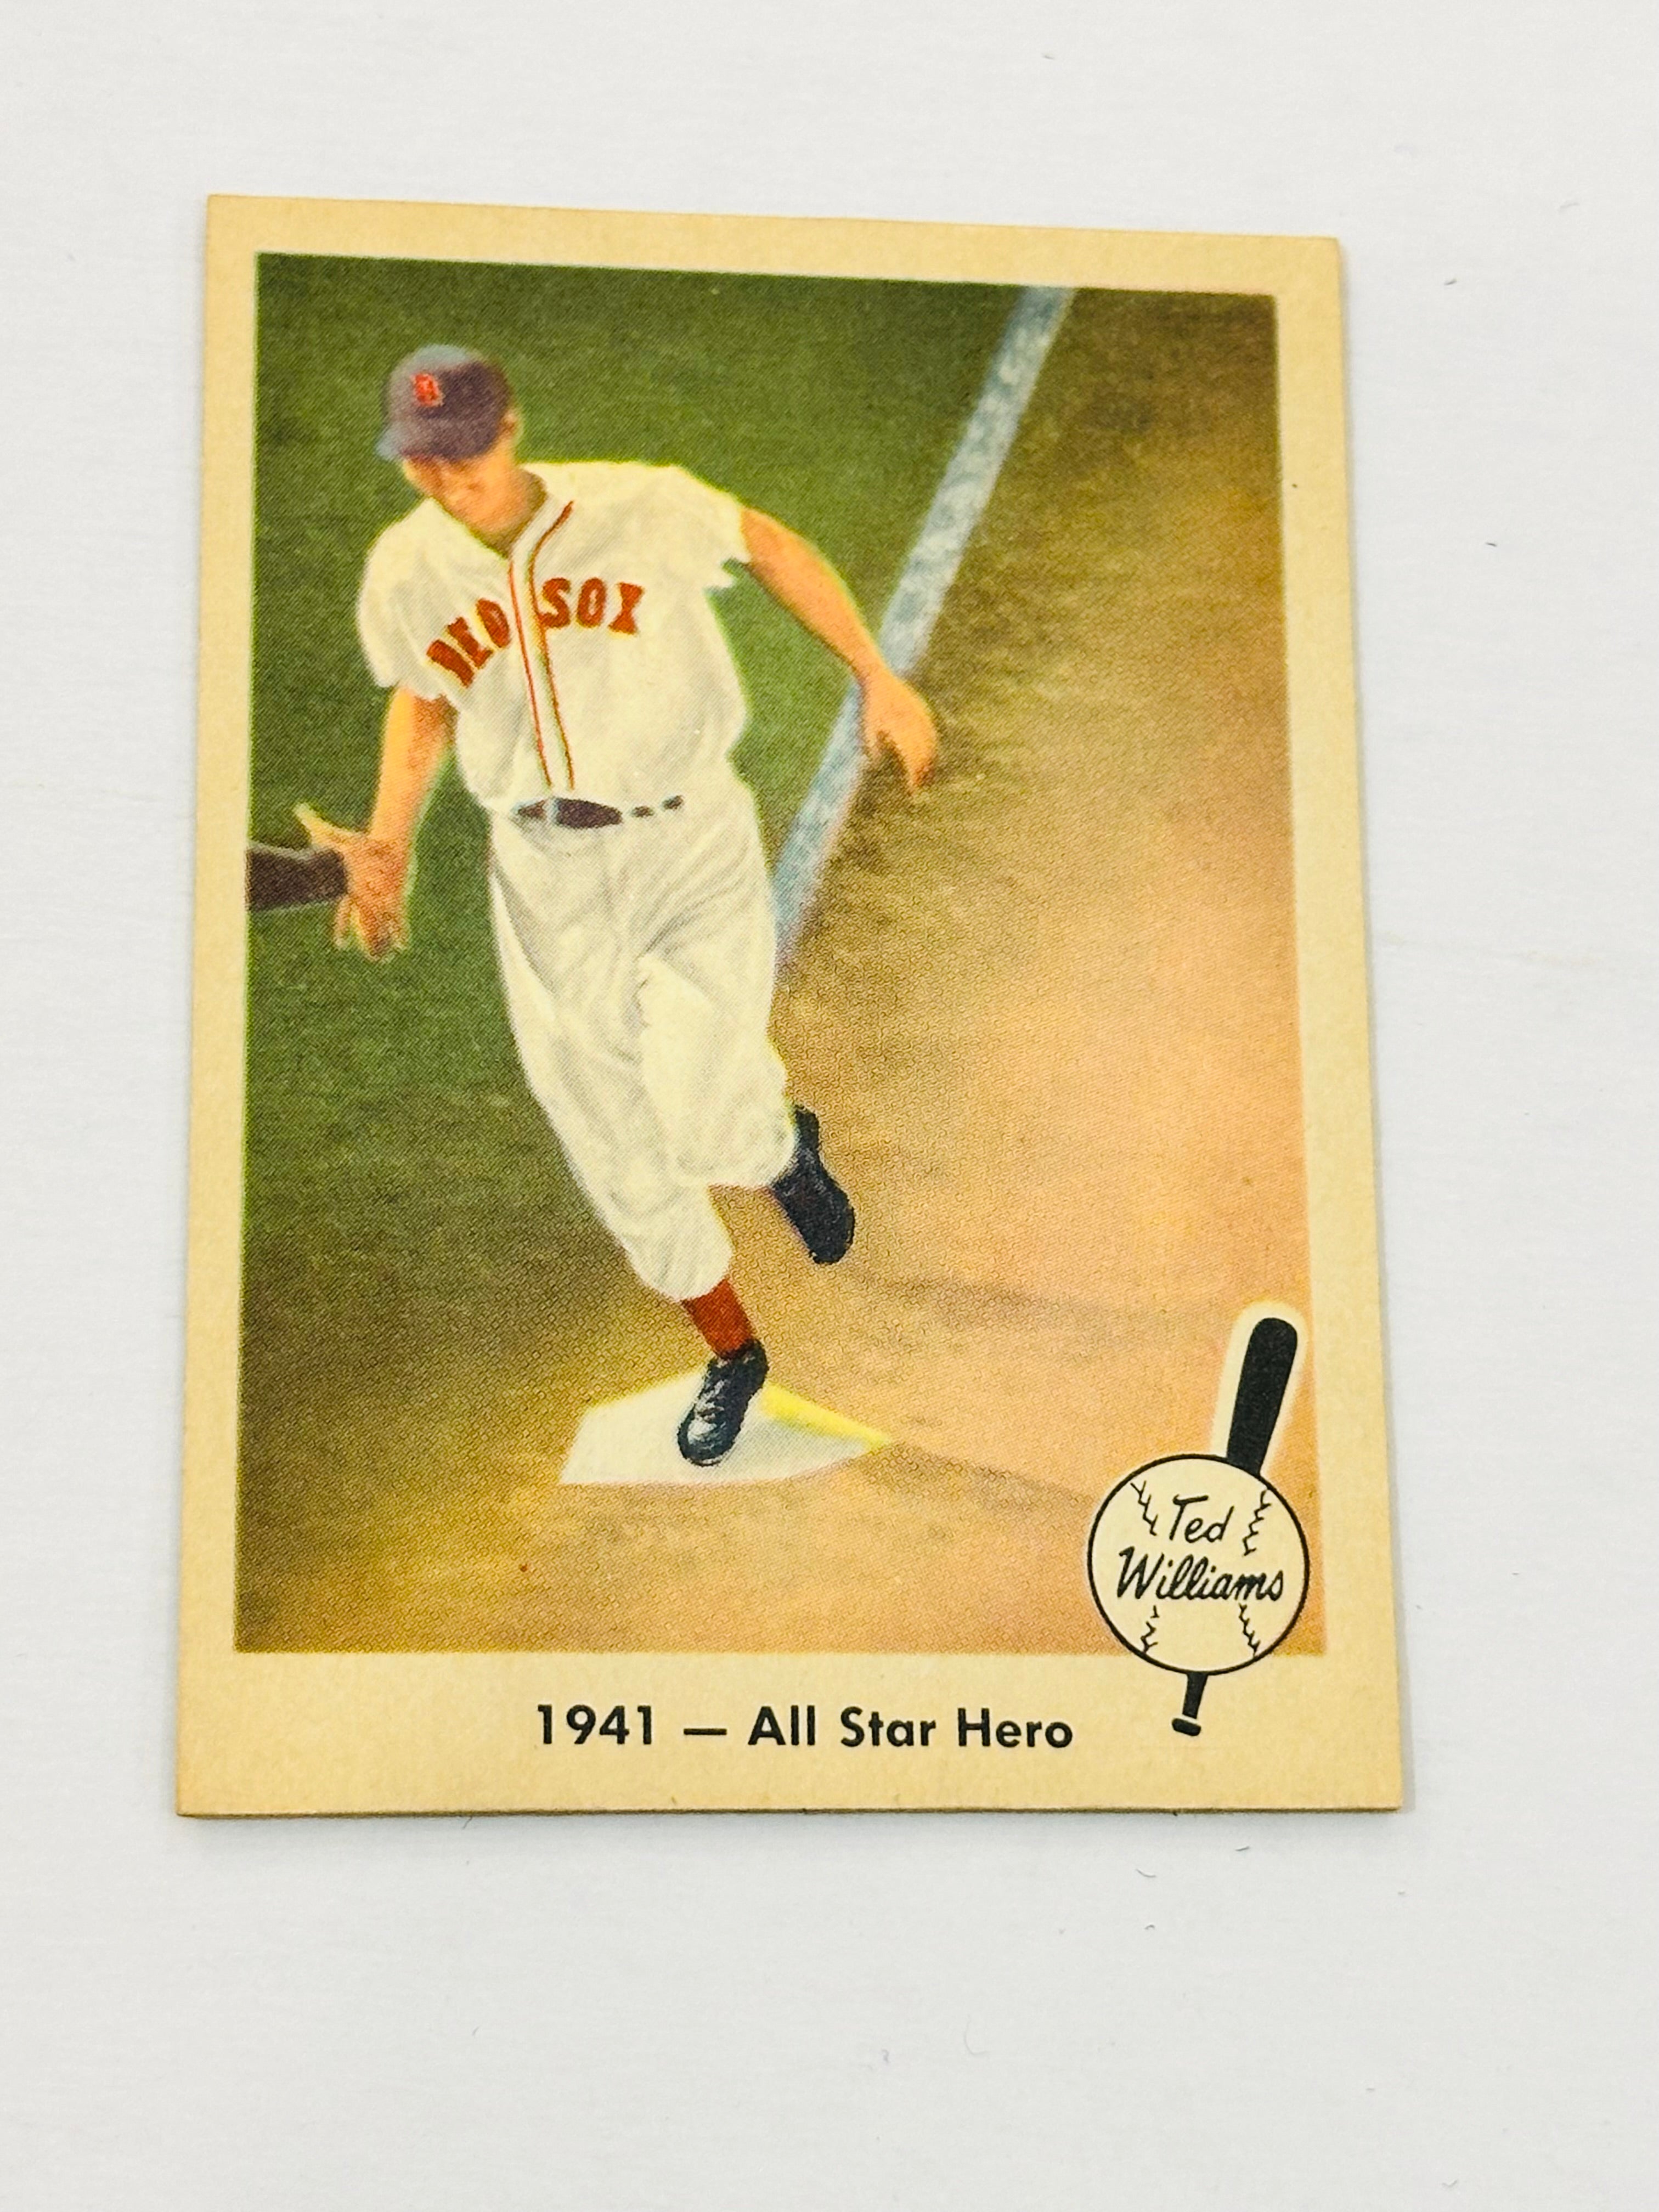 Ted Williams All Star Hero rare vintage baseball card 1959